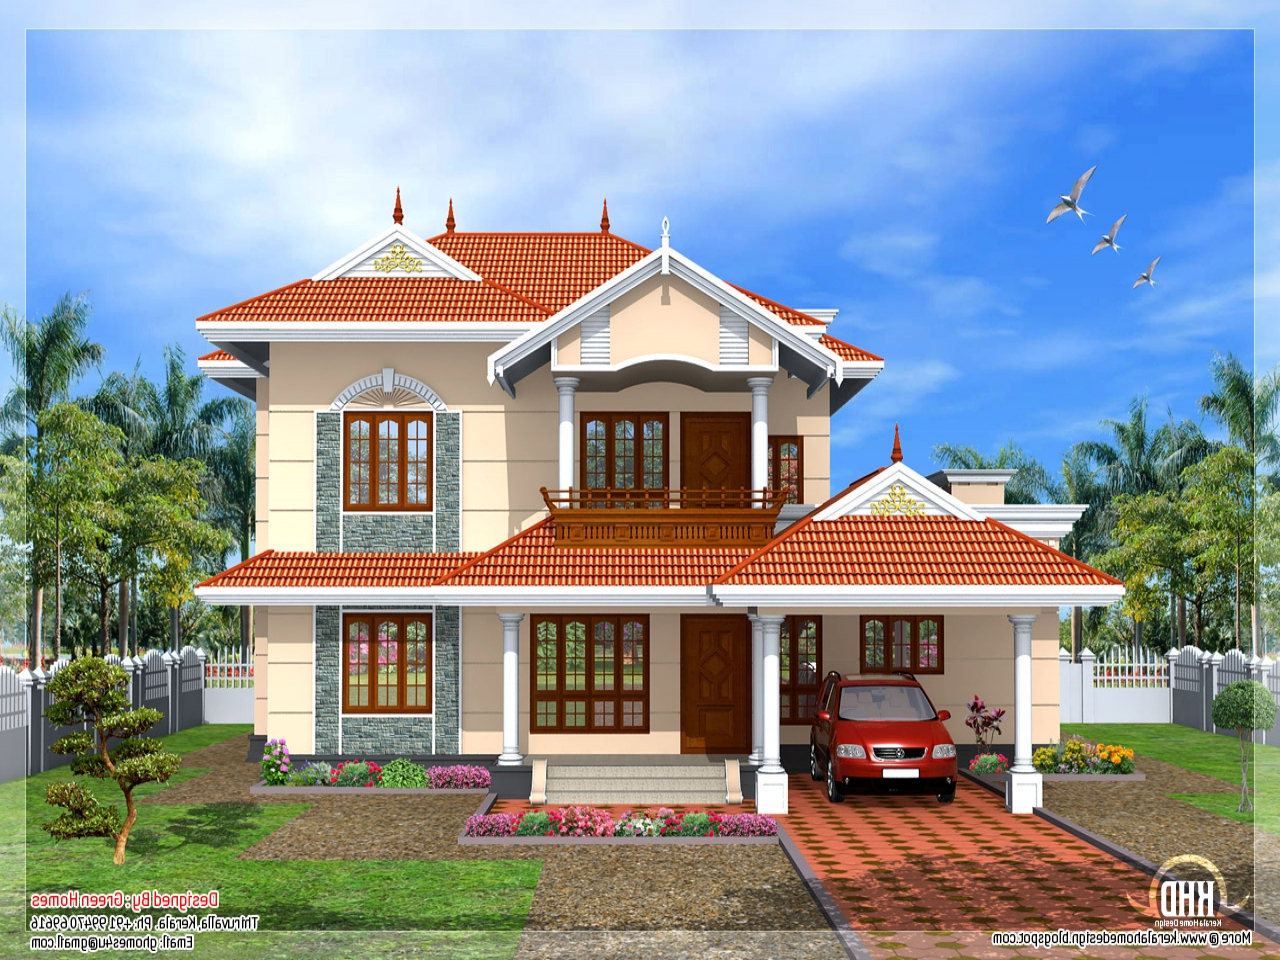 Kerala Beautiful Houses Inside Small House Plans Kerala Home Design Style Home Design